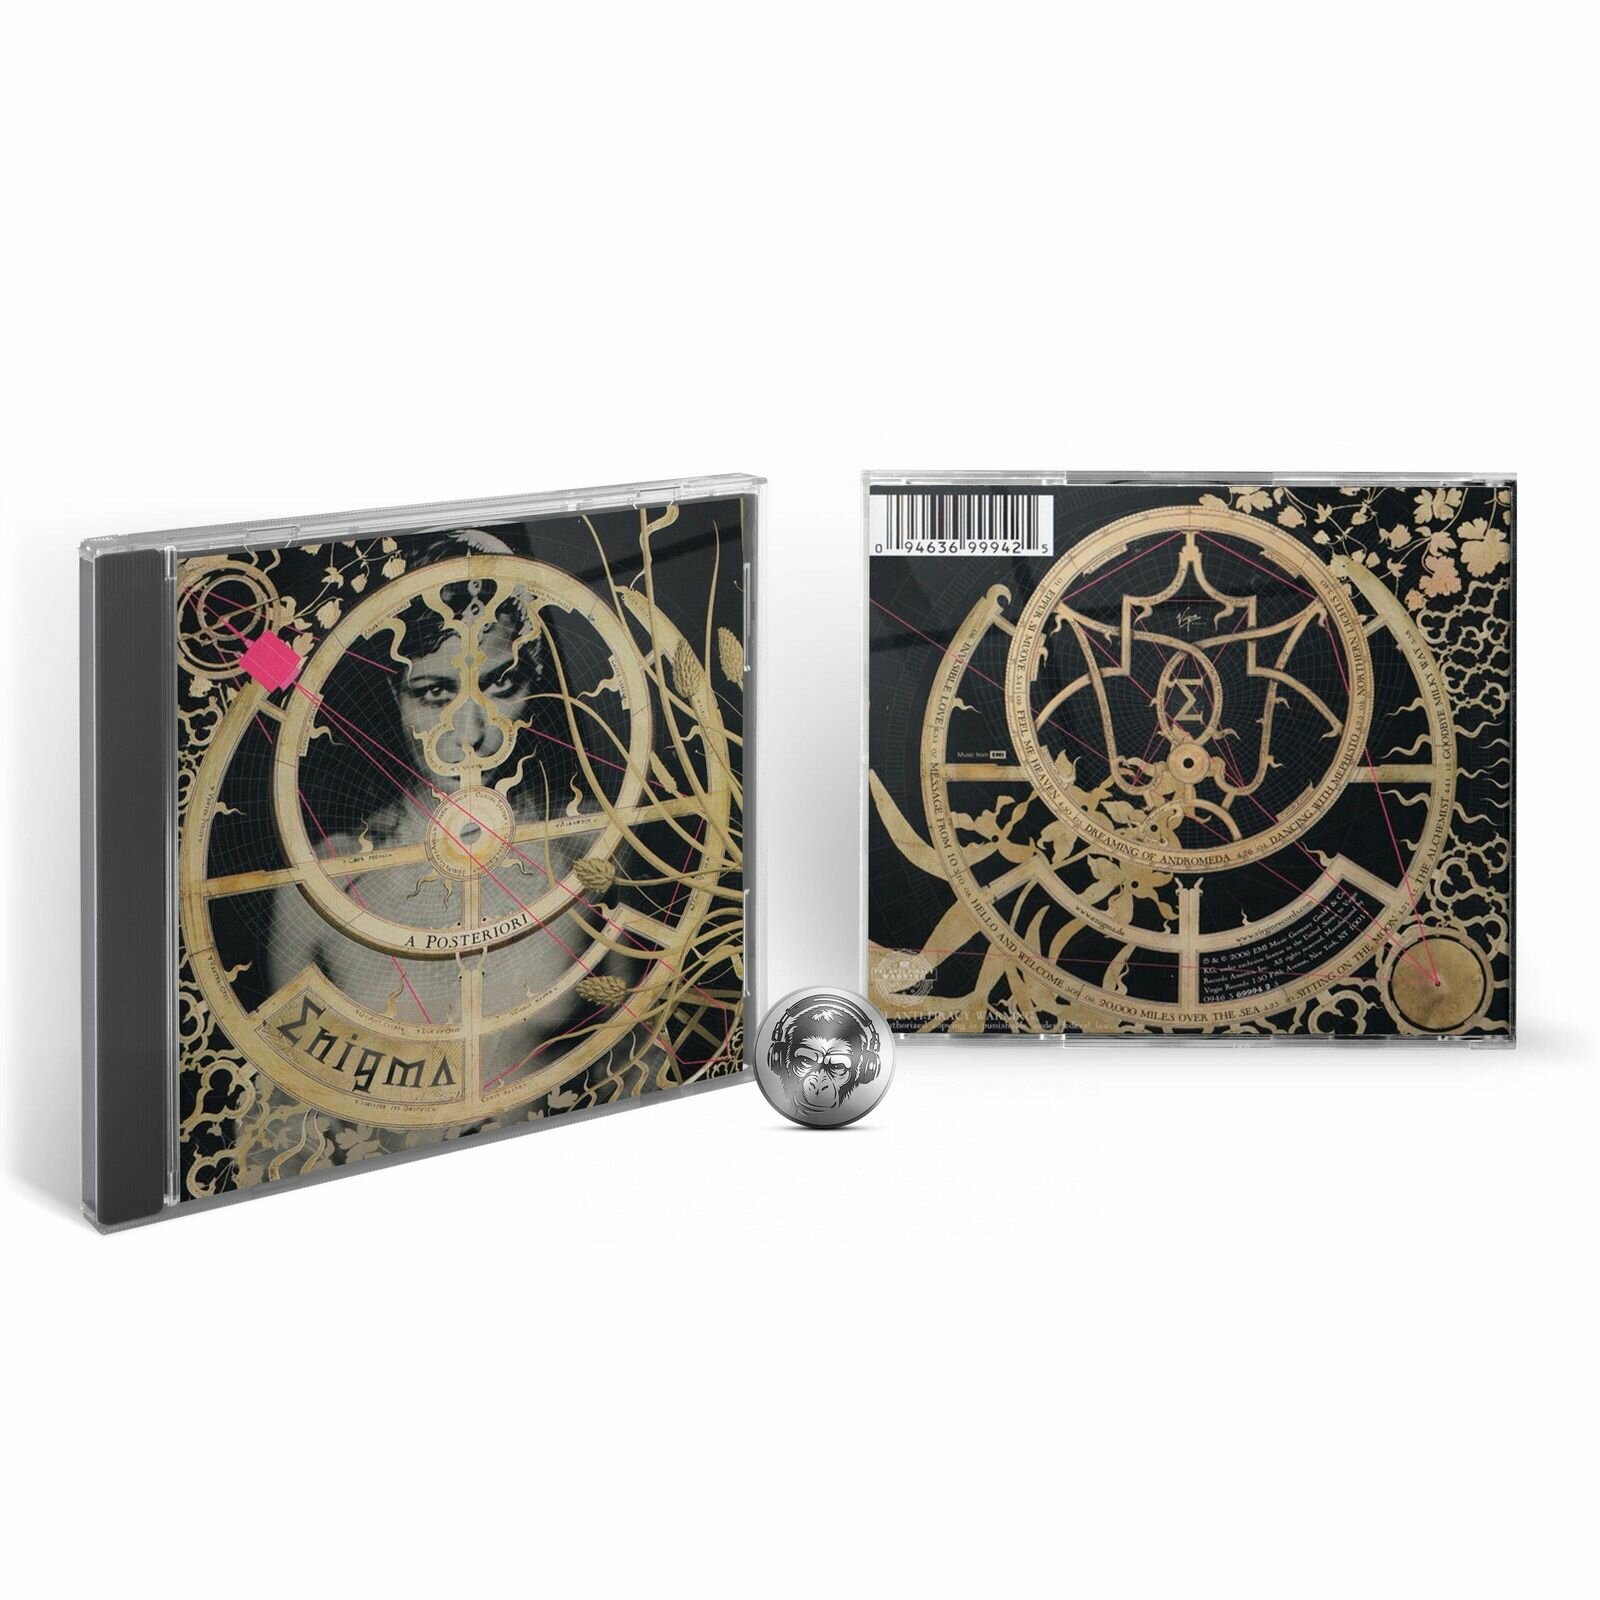 Enigma - A Posteriori (1CD) 2006 Virgin, Jewel Аудио диск